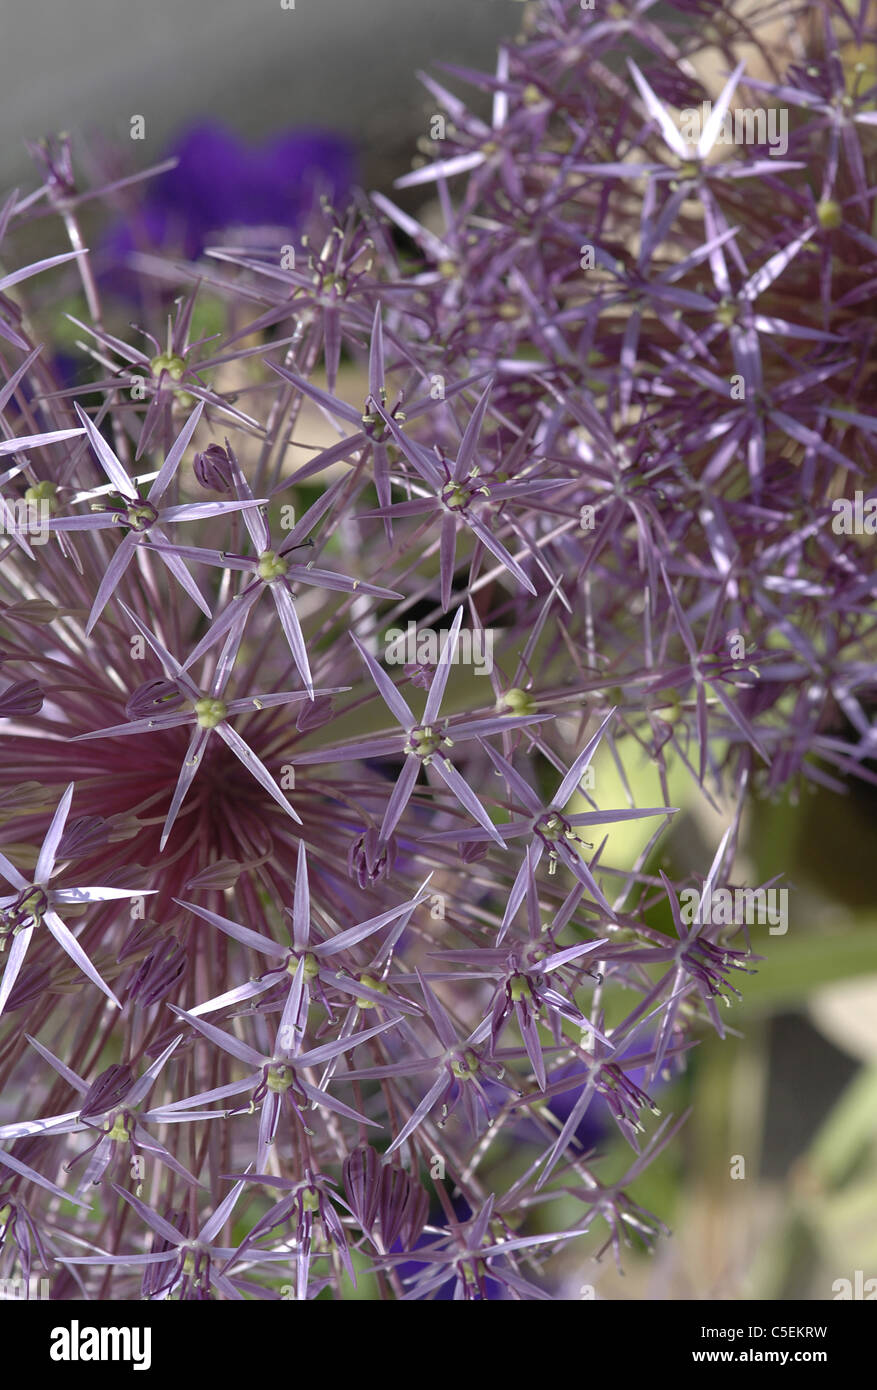 Purple Alium taken in country garden. UK. Macro image. Stock Photo